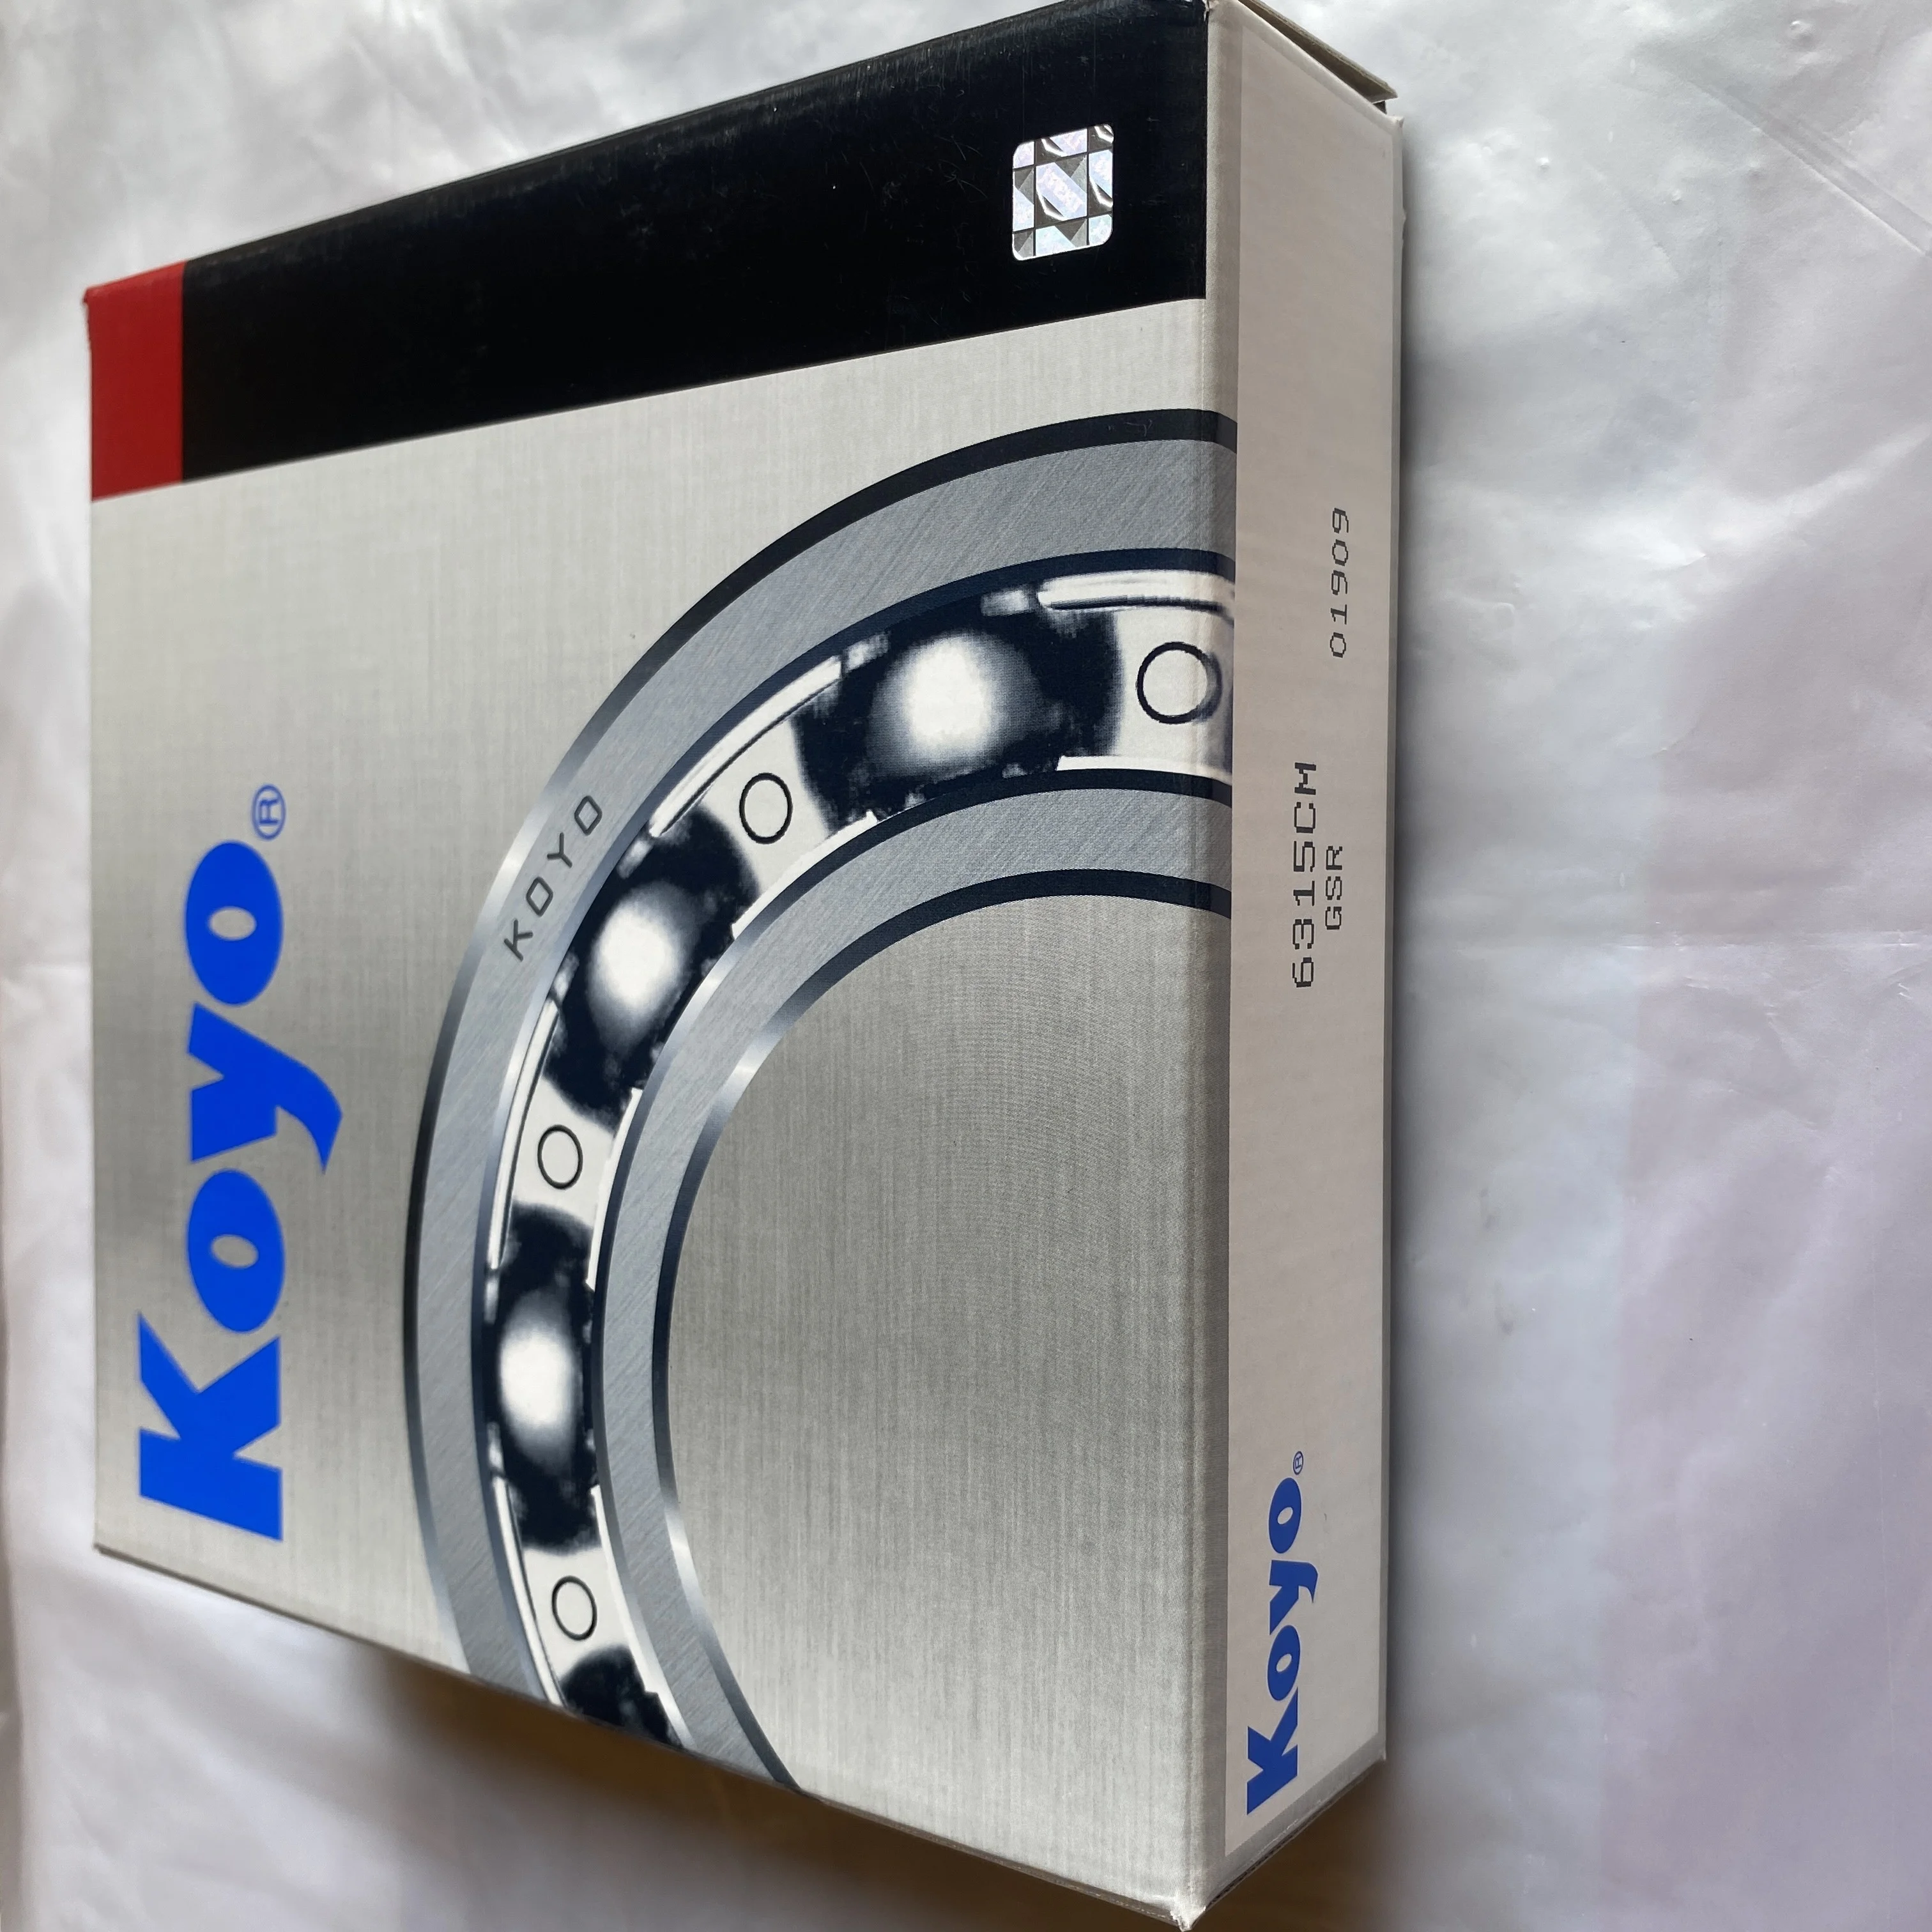 KOYO Motor Bearing 6304 2rs1 Deep Groove Ball Bearings